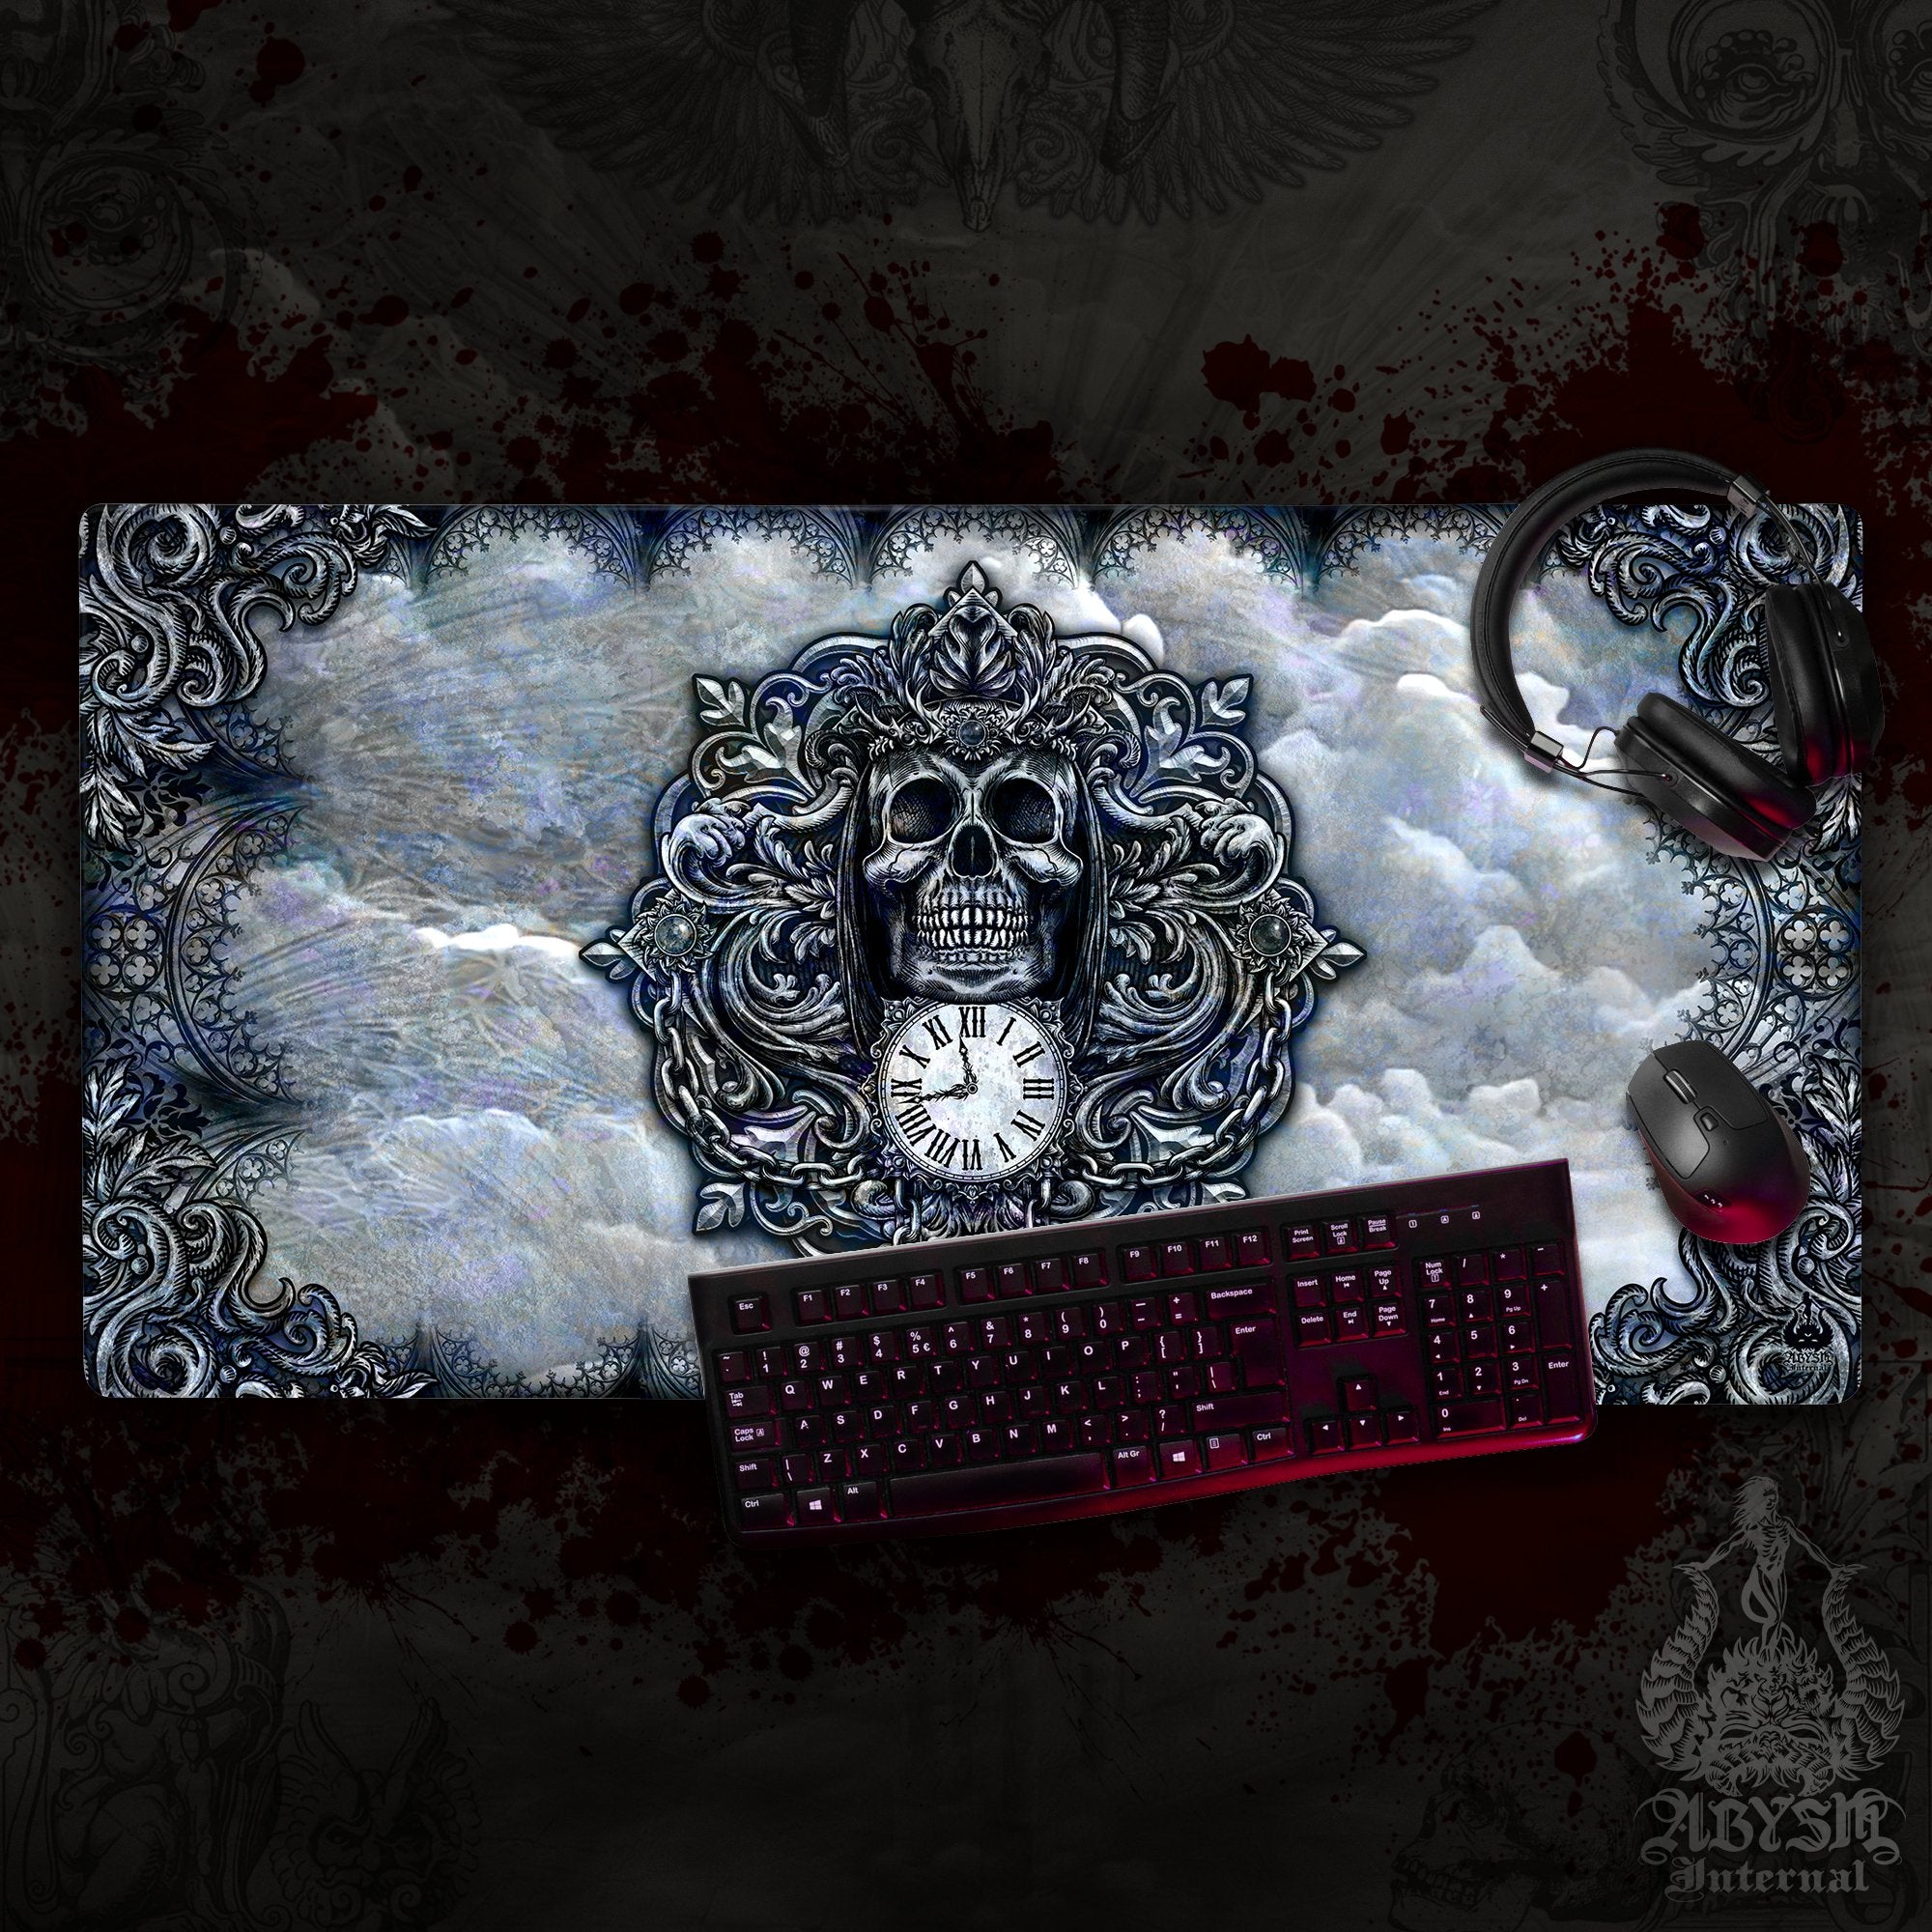 Gothic Gaming Mouse Pad, Grim Reaper Skull Desk Mat, Goth Table Protector Cover, Memento Mori Workpad, Dark Fantasy Art Print - 3 Colors - Abysm Internal